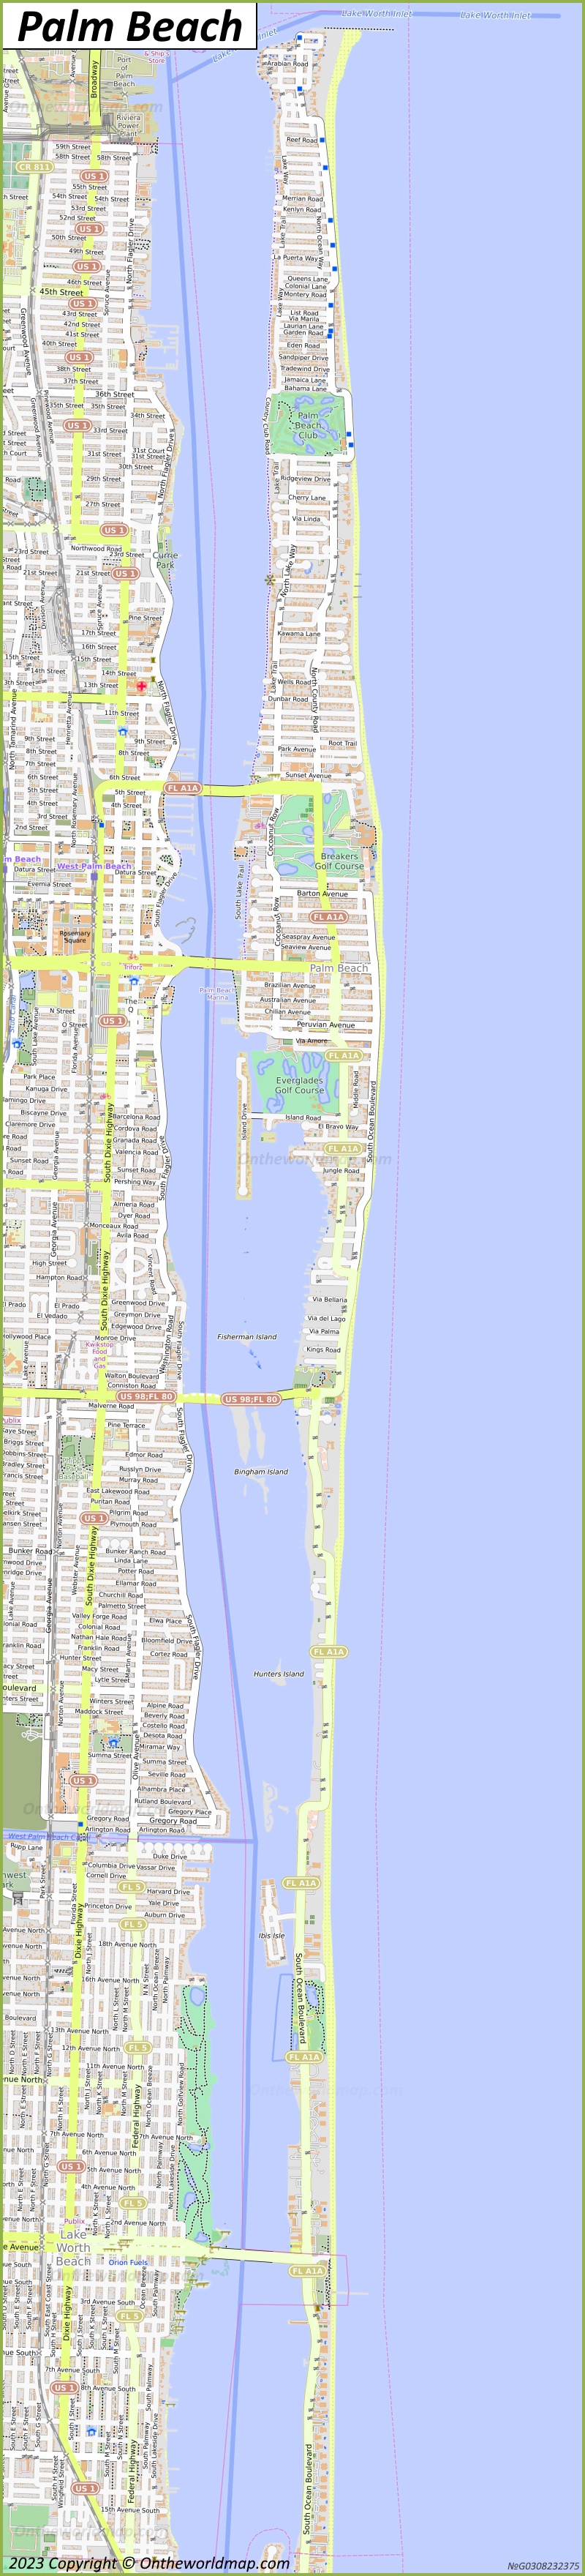 Map of Palm Beach